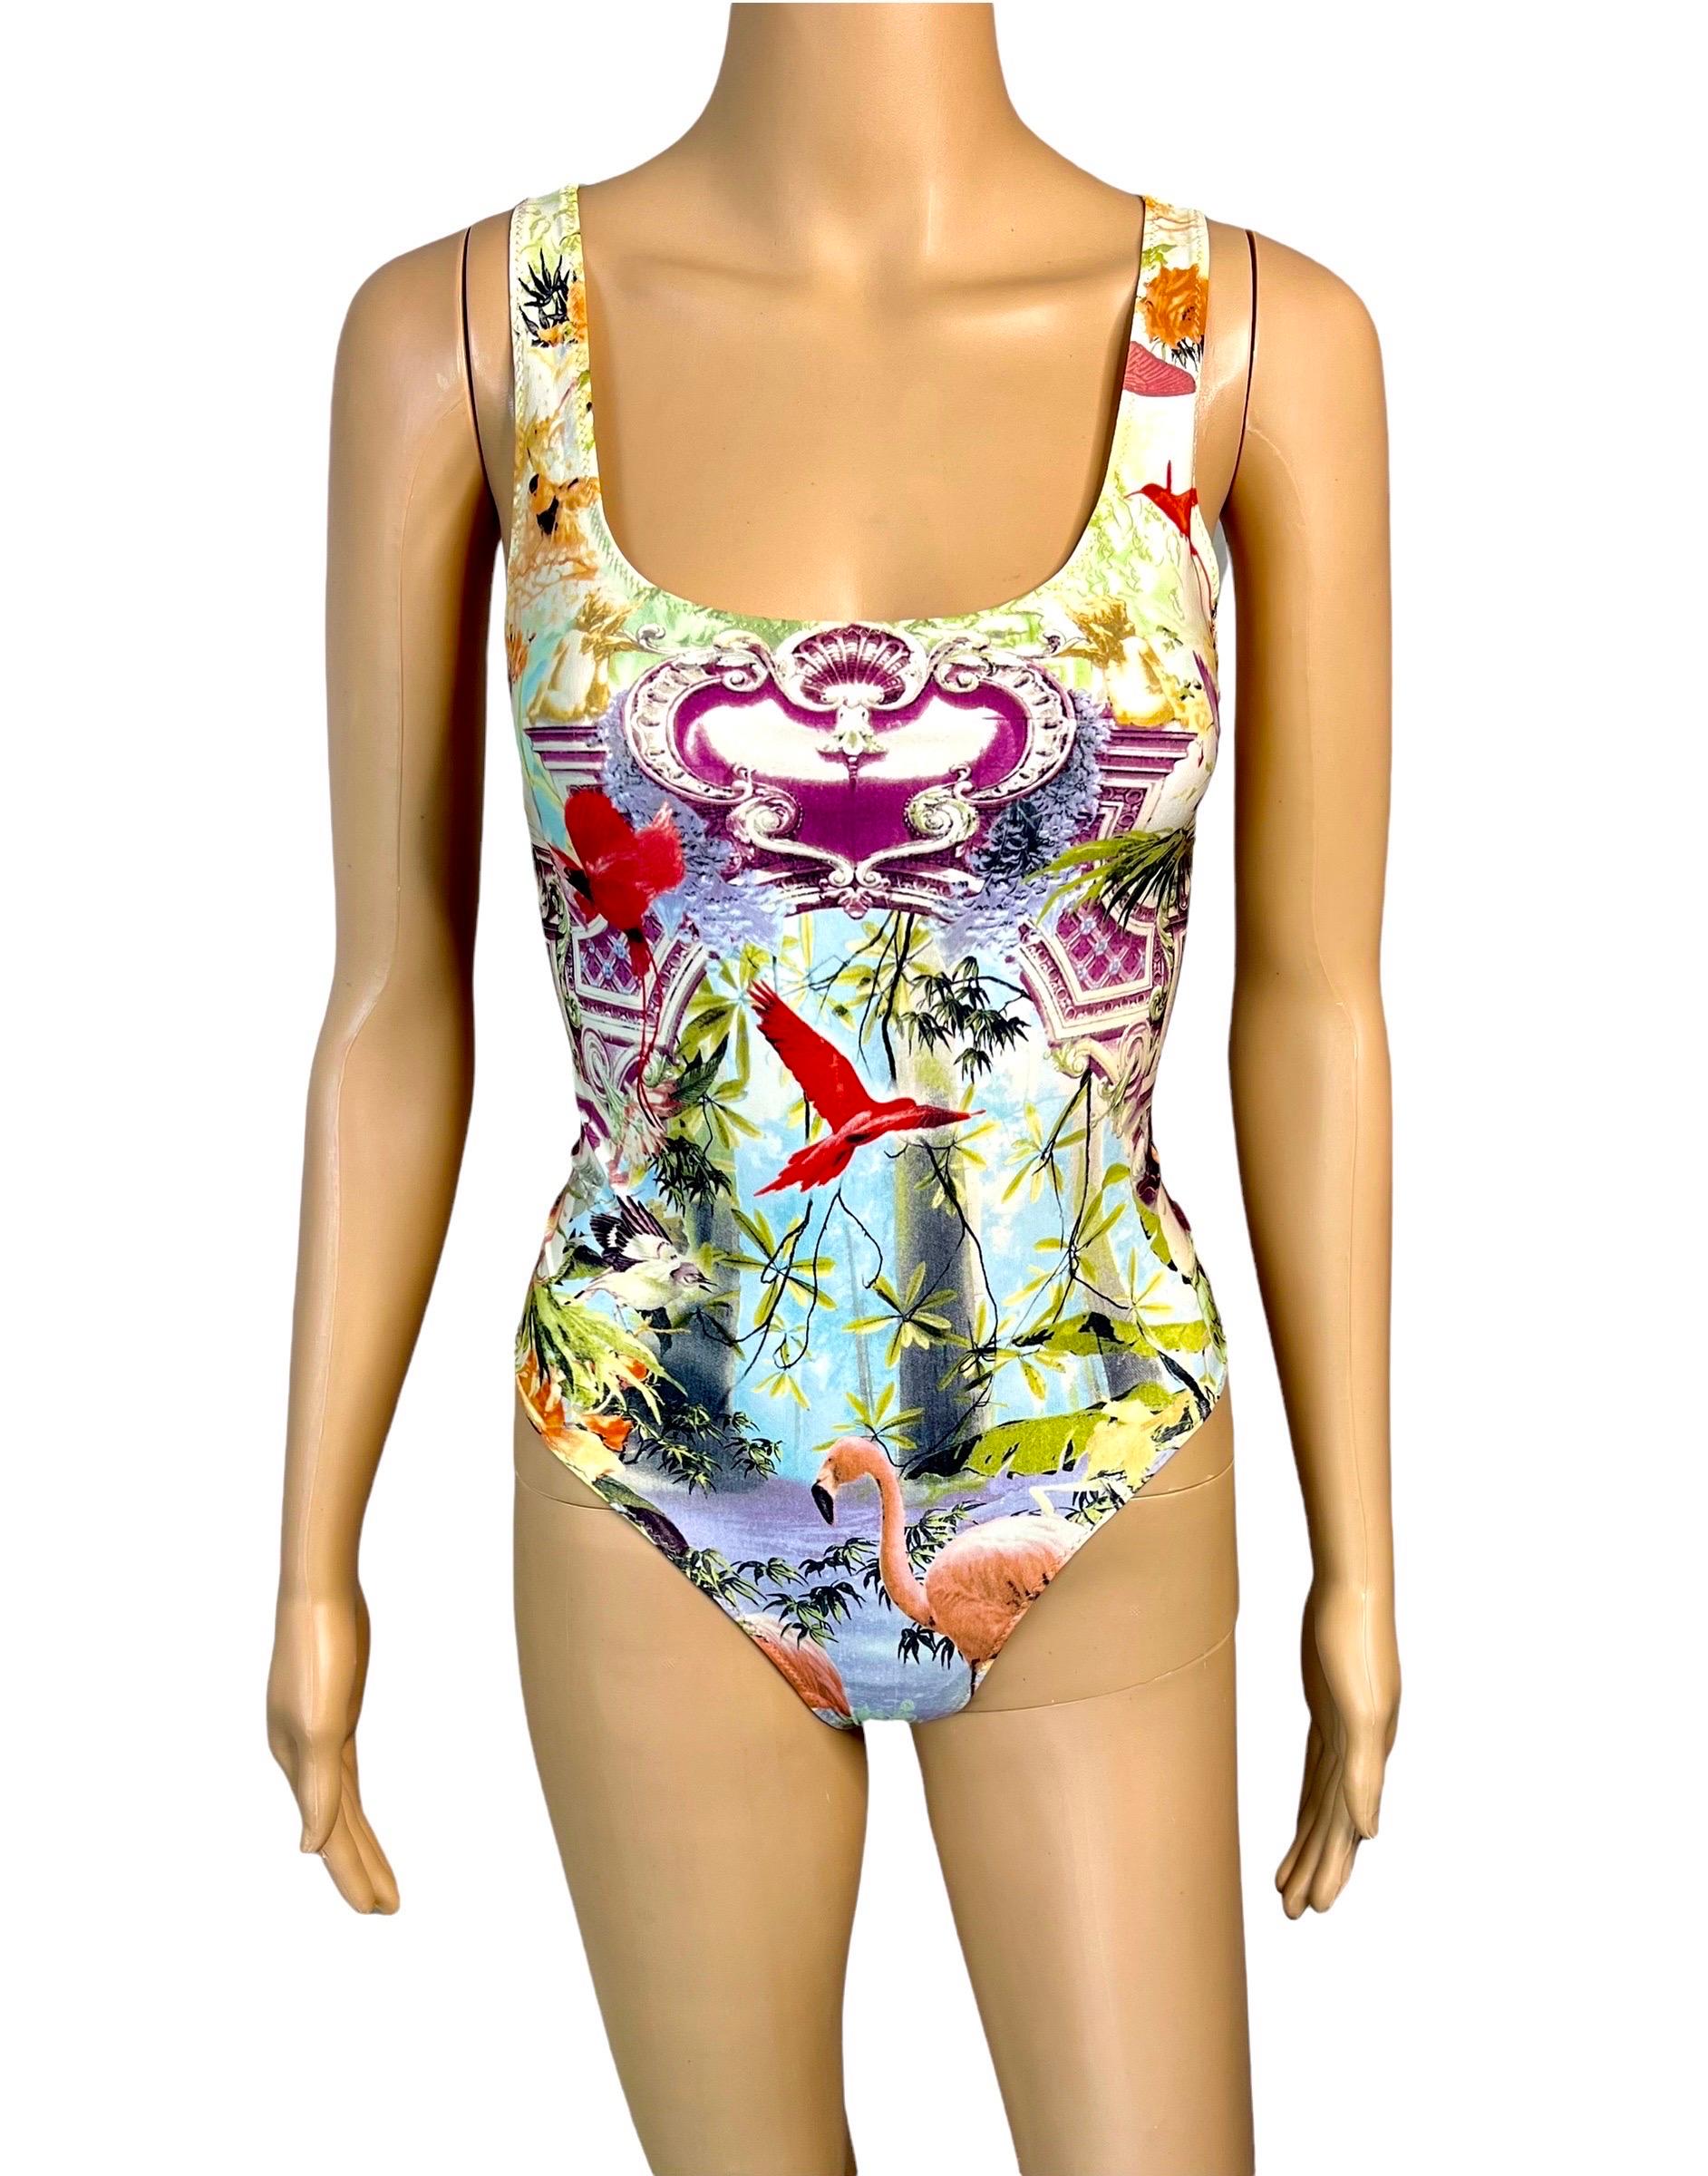 Jean Paul Gaultier Soleil S/S 1999 Flamingo Tropical Bodysuit Swimwear Swimsuit In Excellent Condition For Sale In Naples, FL